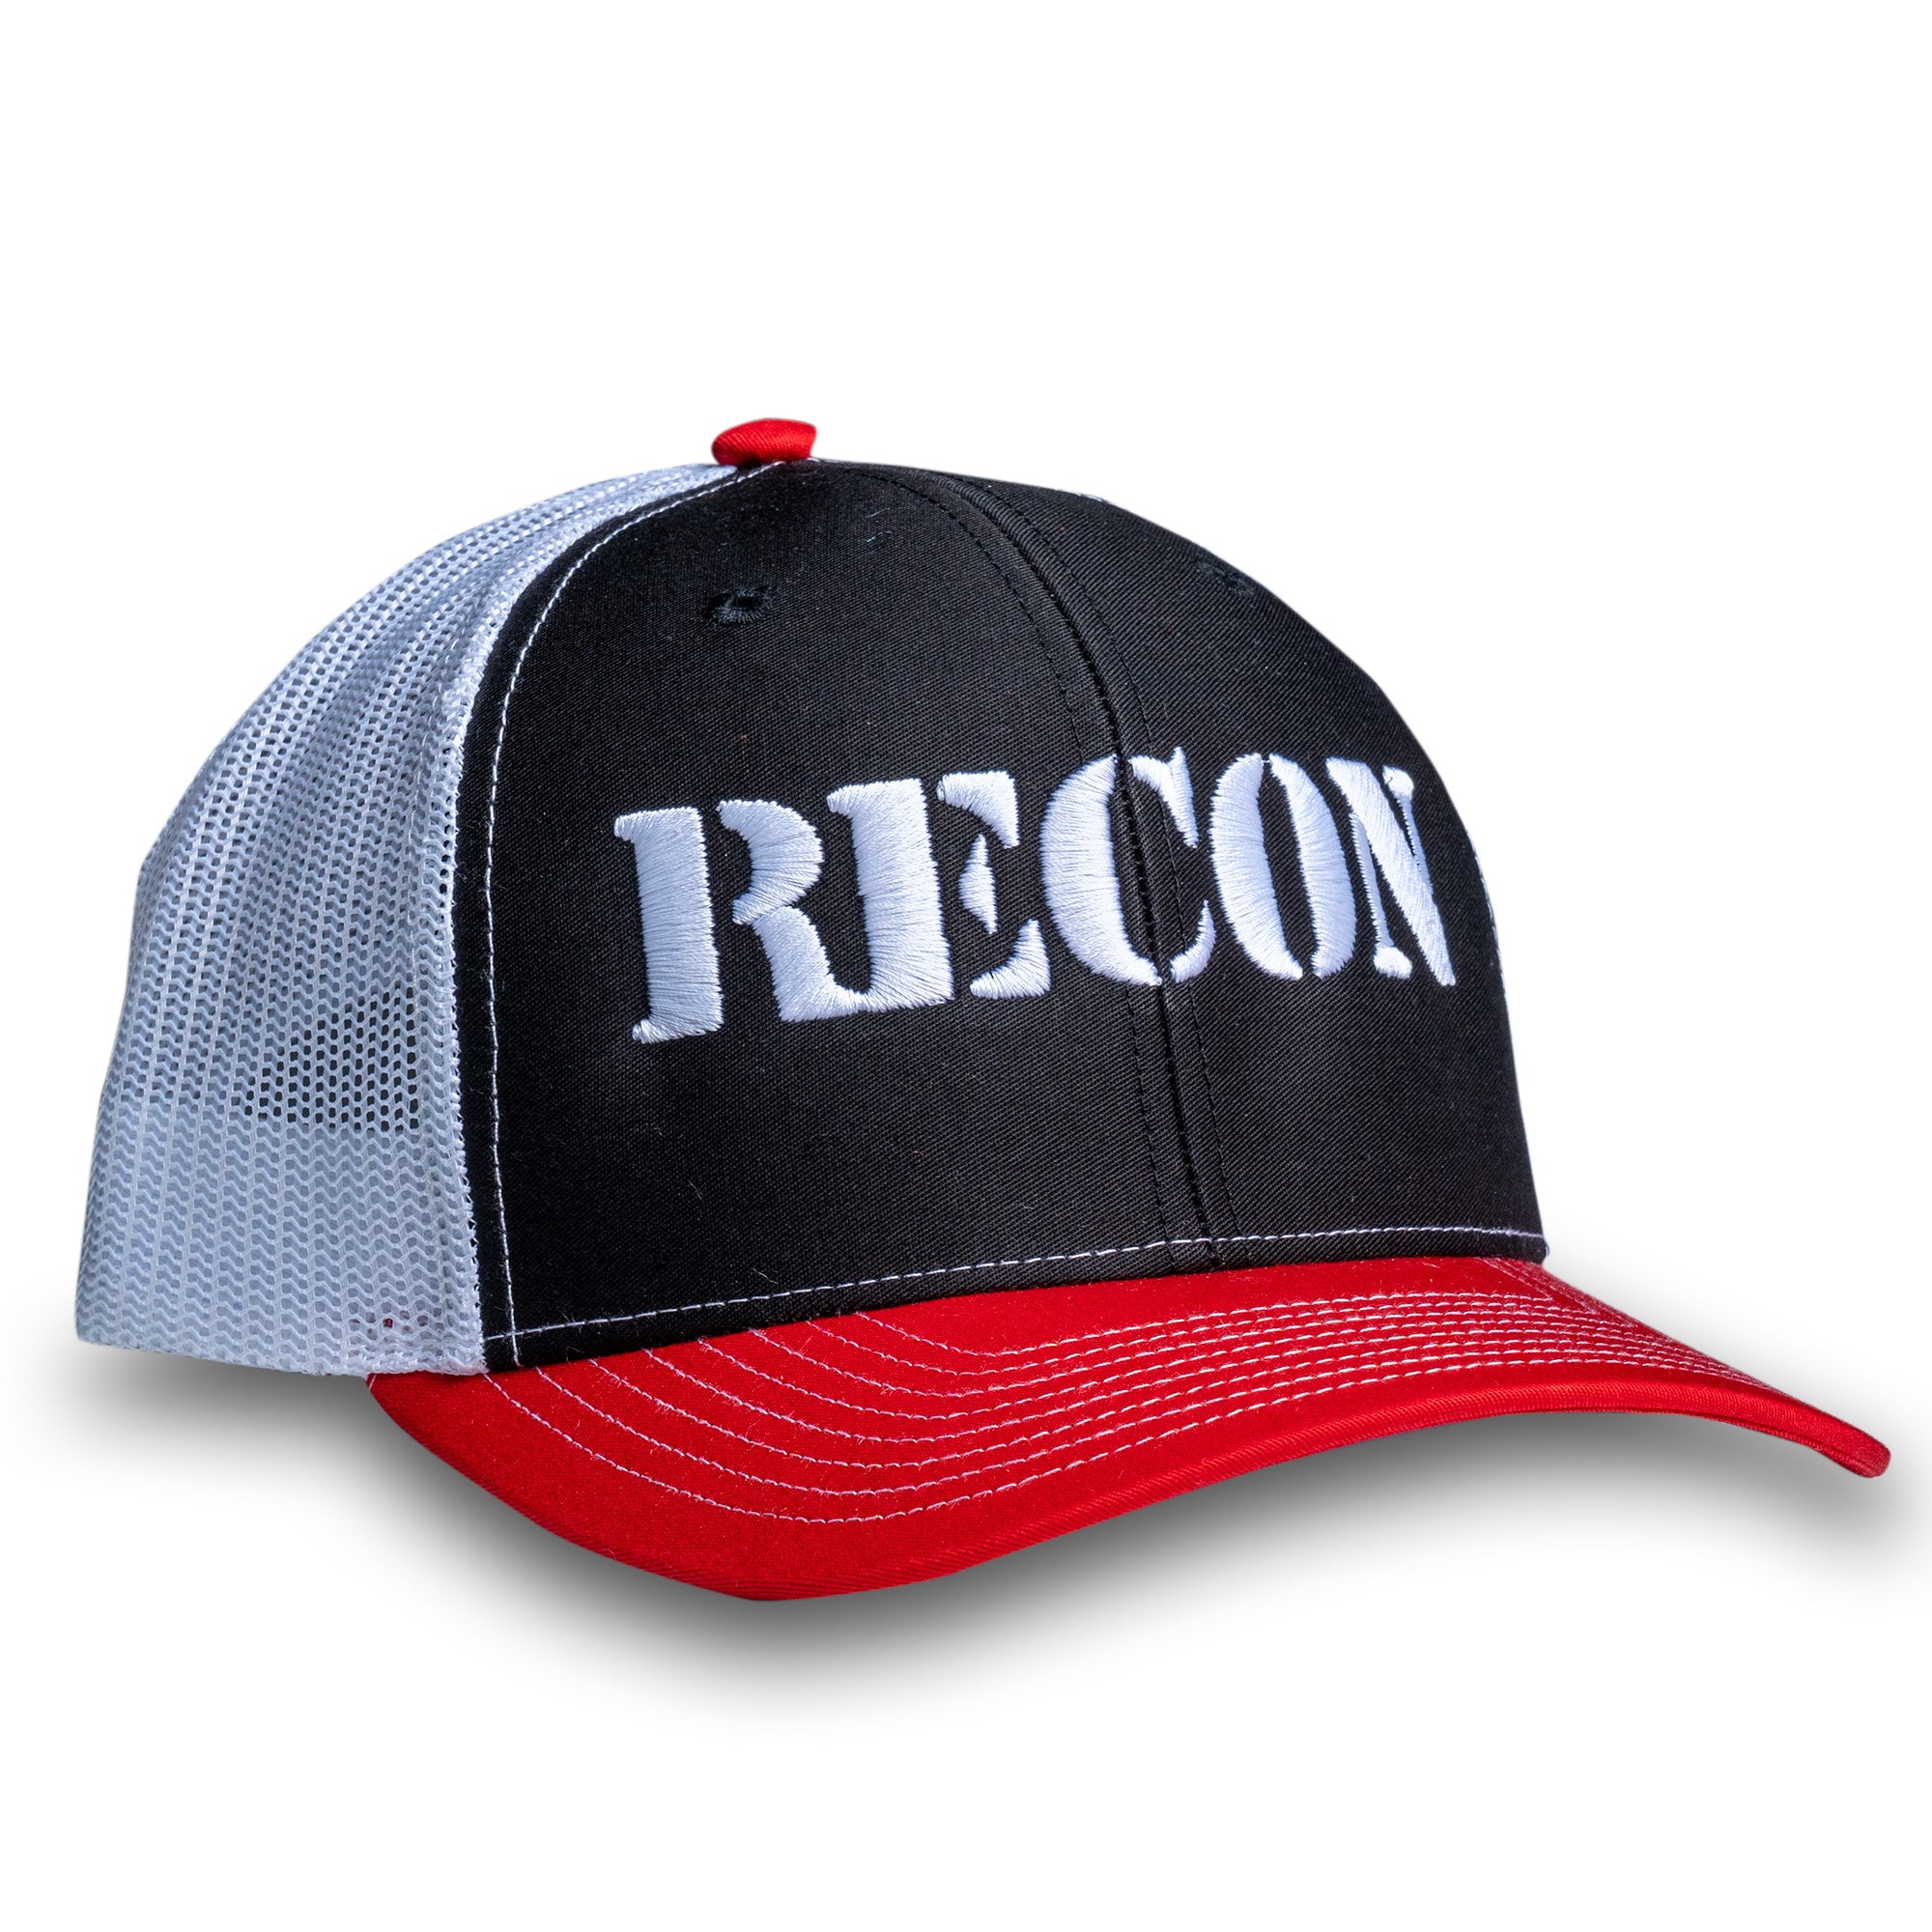 RECON Snapback Trucker Hat - Black/Red/White